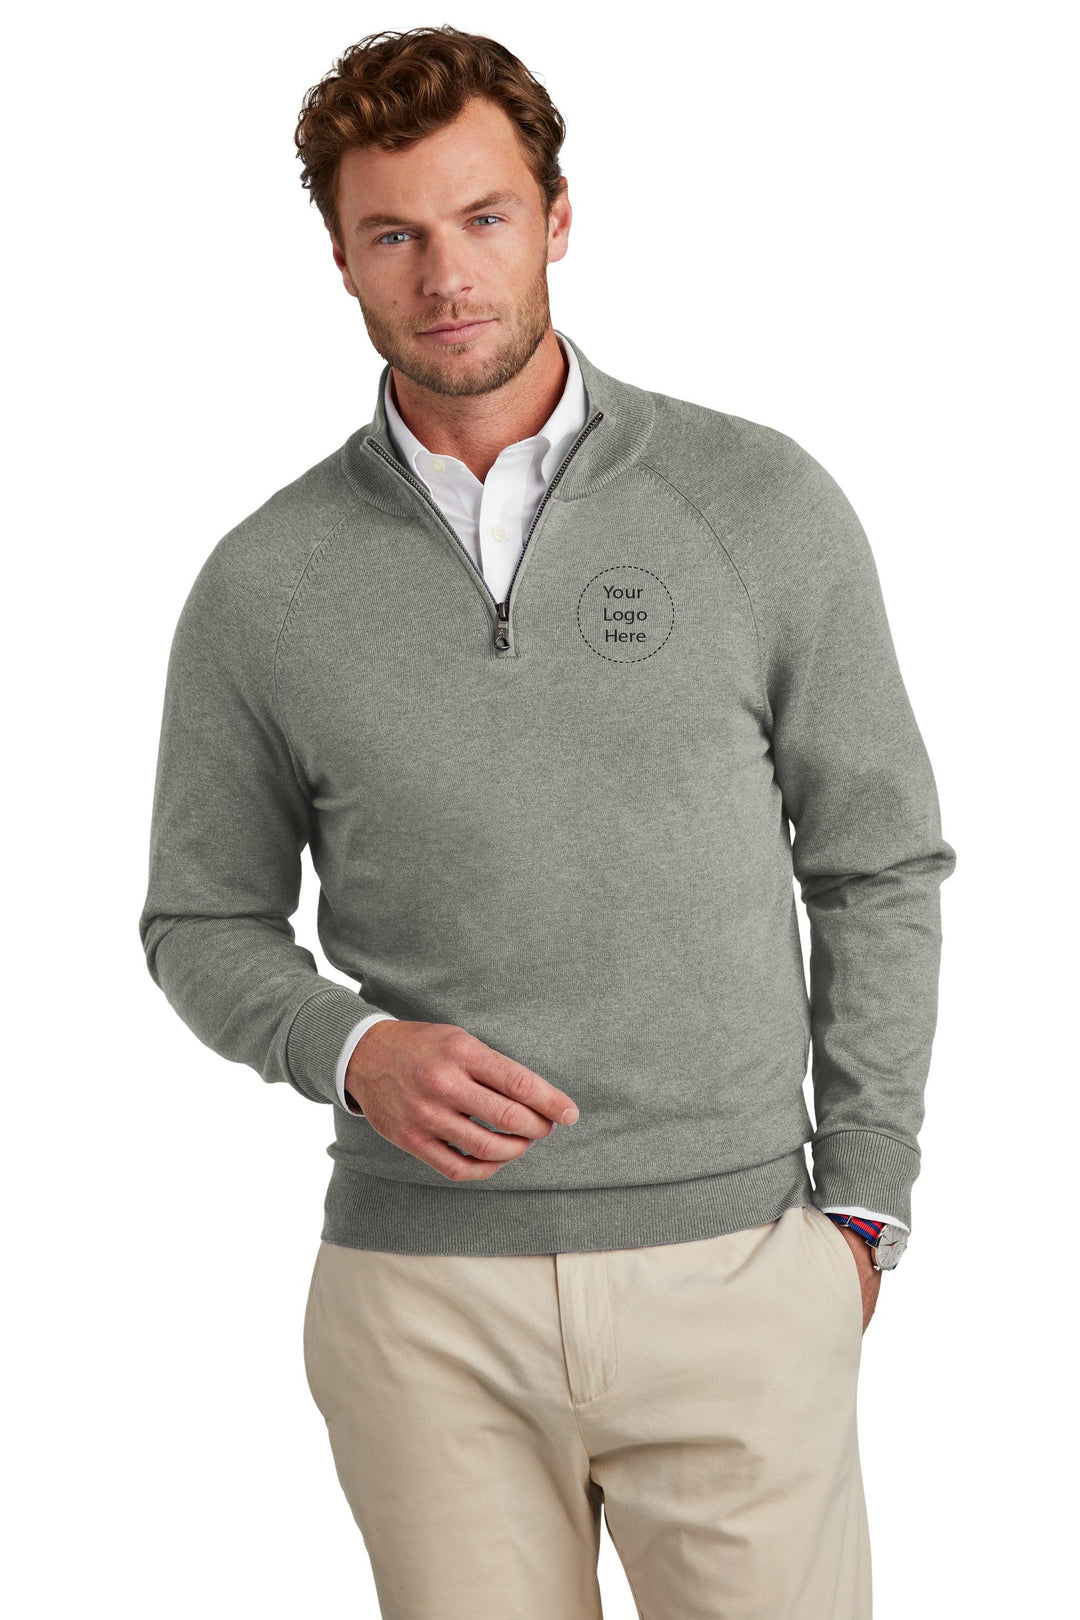 Keller Williams NEW KW-BB18402 Brooks Brothers® Men's Cotton Stretch 1/4-Zip Sweater 